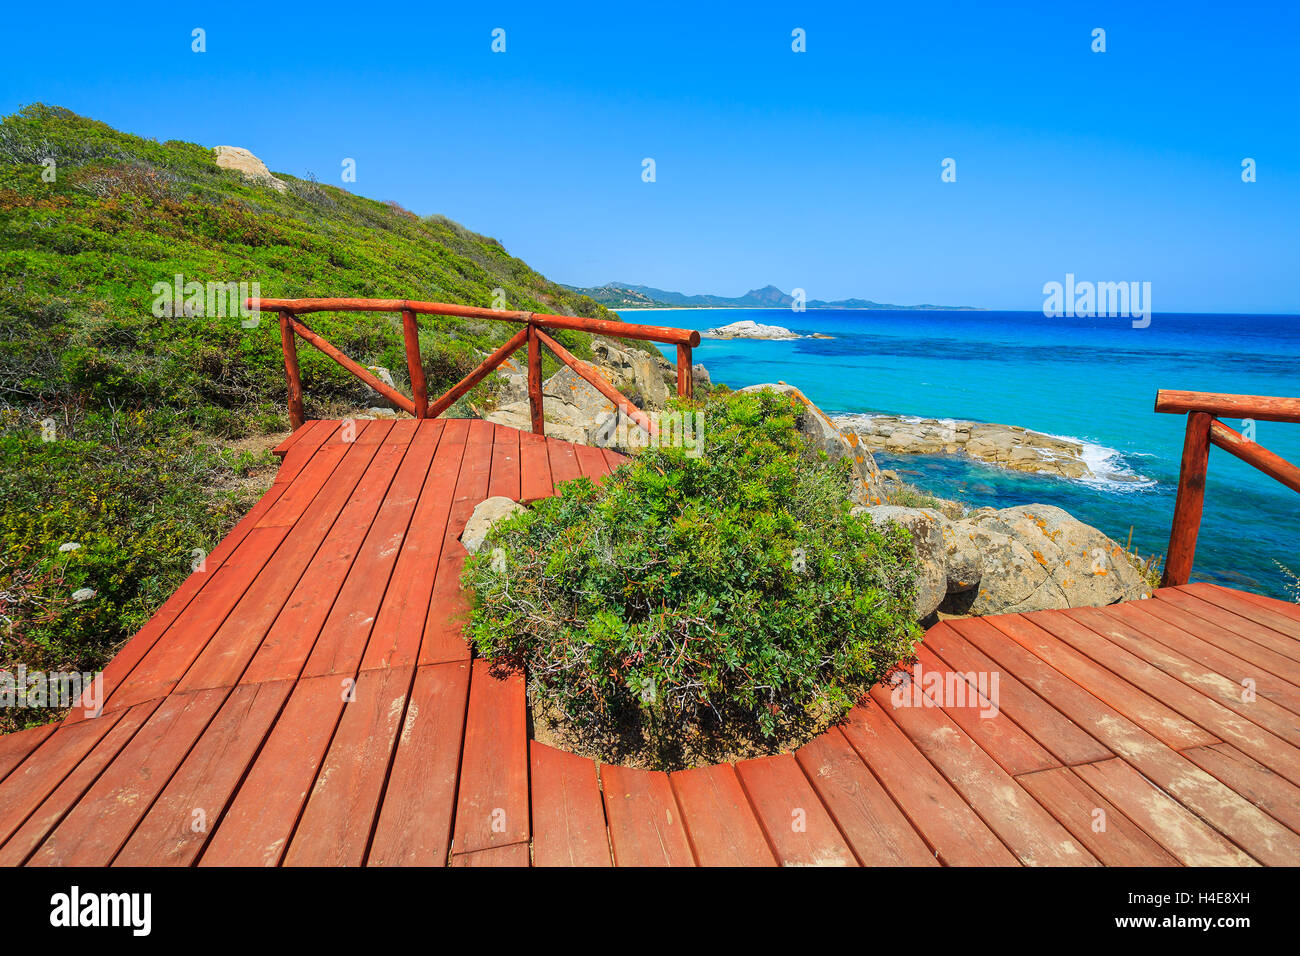 Red wooden viewpoint platform at Cala Sinzias bay and turquoise sea view, Sardinia island, Italy Stock Photo